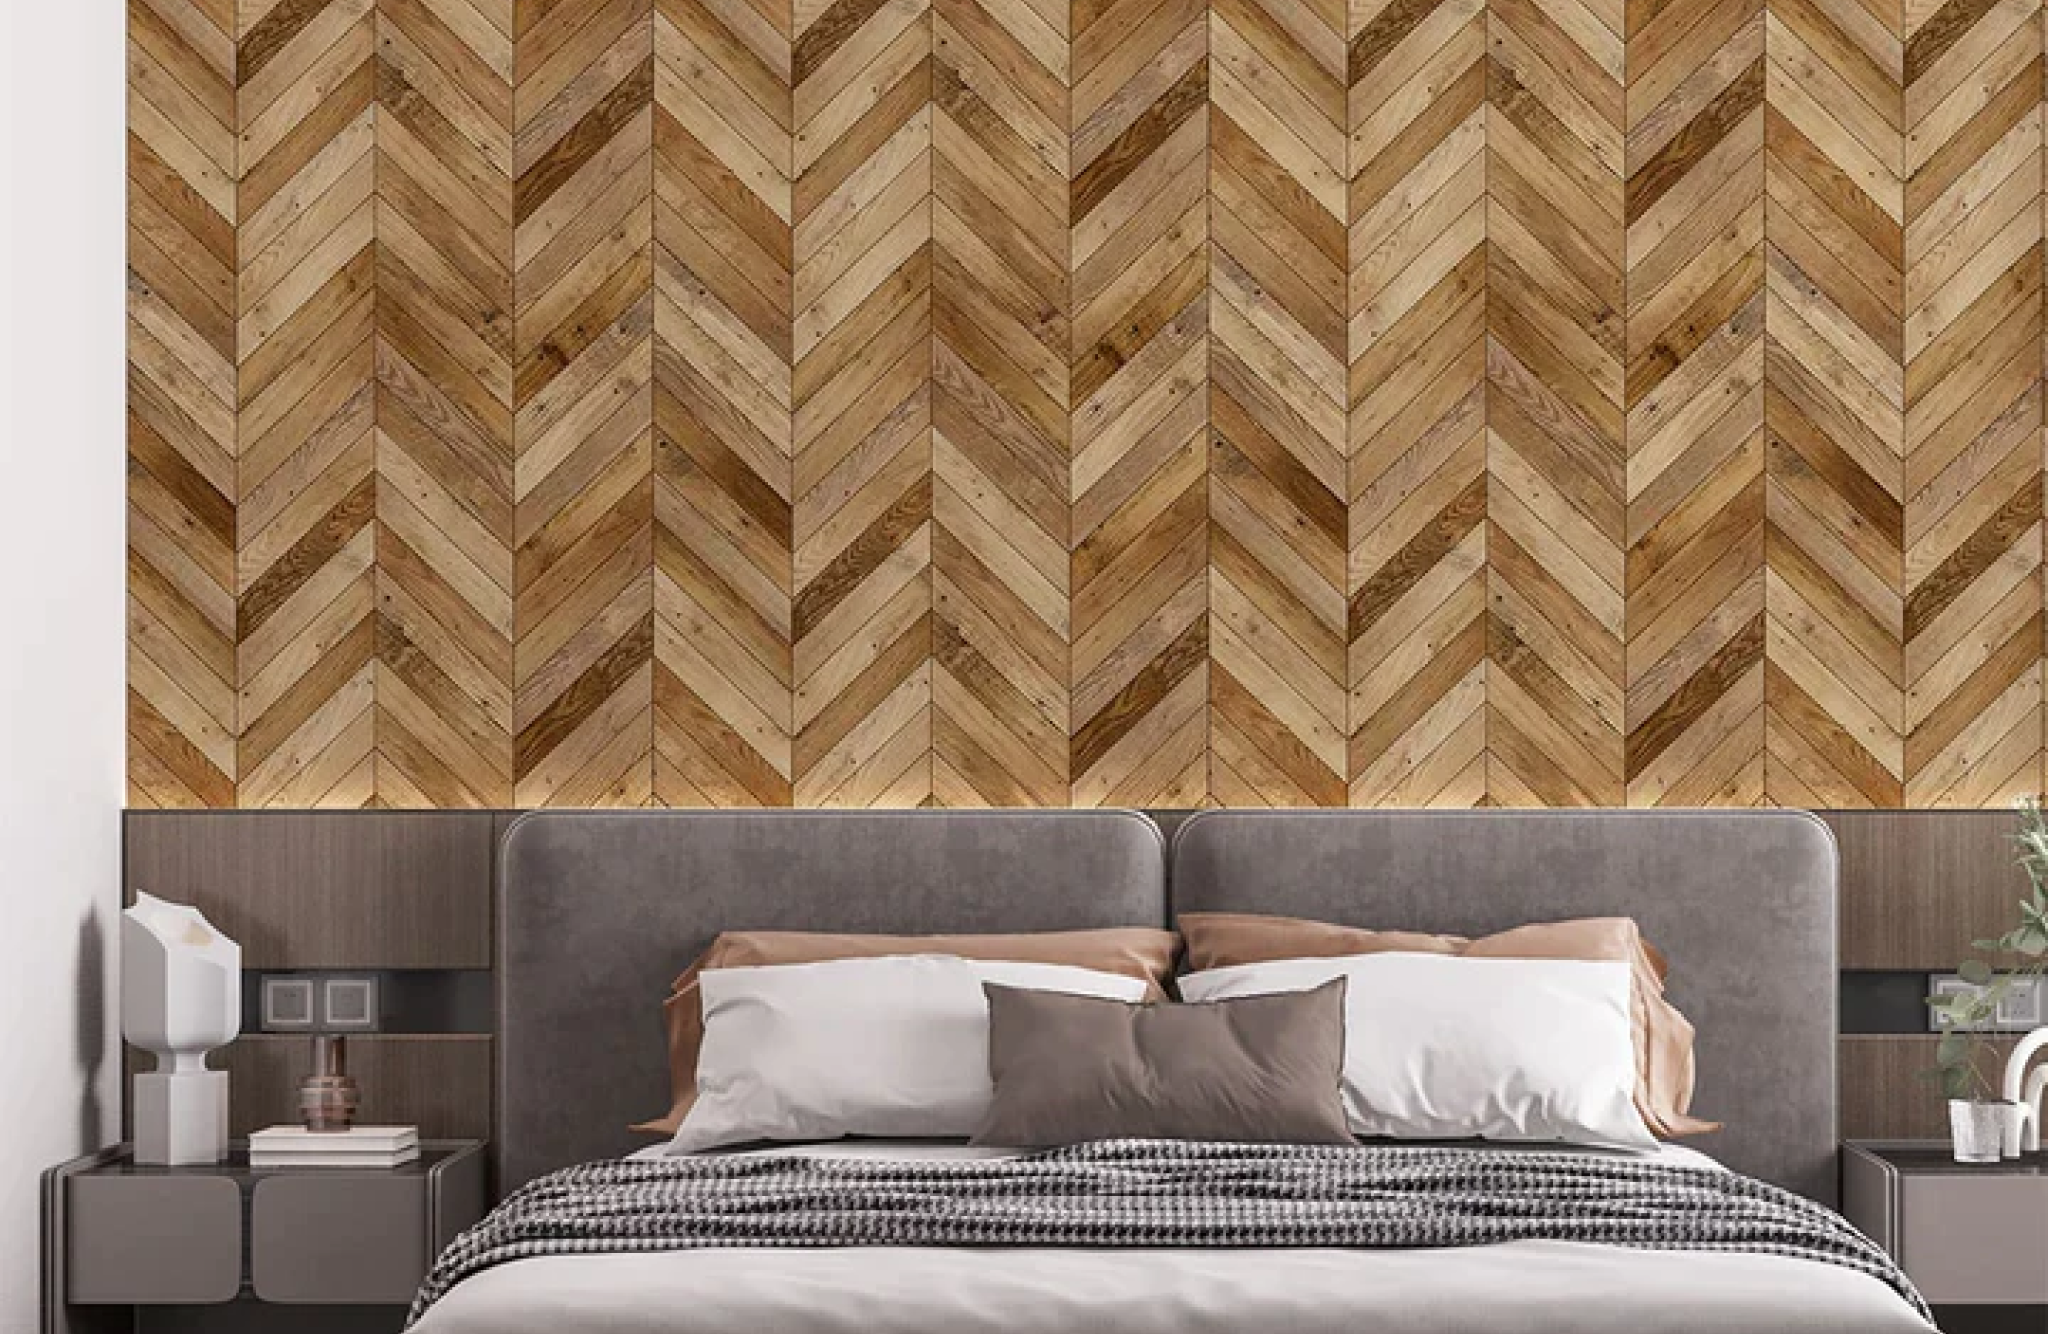 https://www.thepanelhub.com/collections/wall-panels/products/american-oak-slat-wood-wall-panel